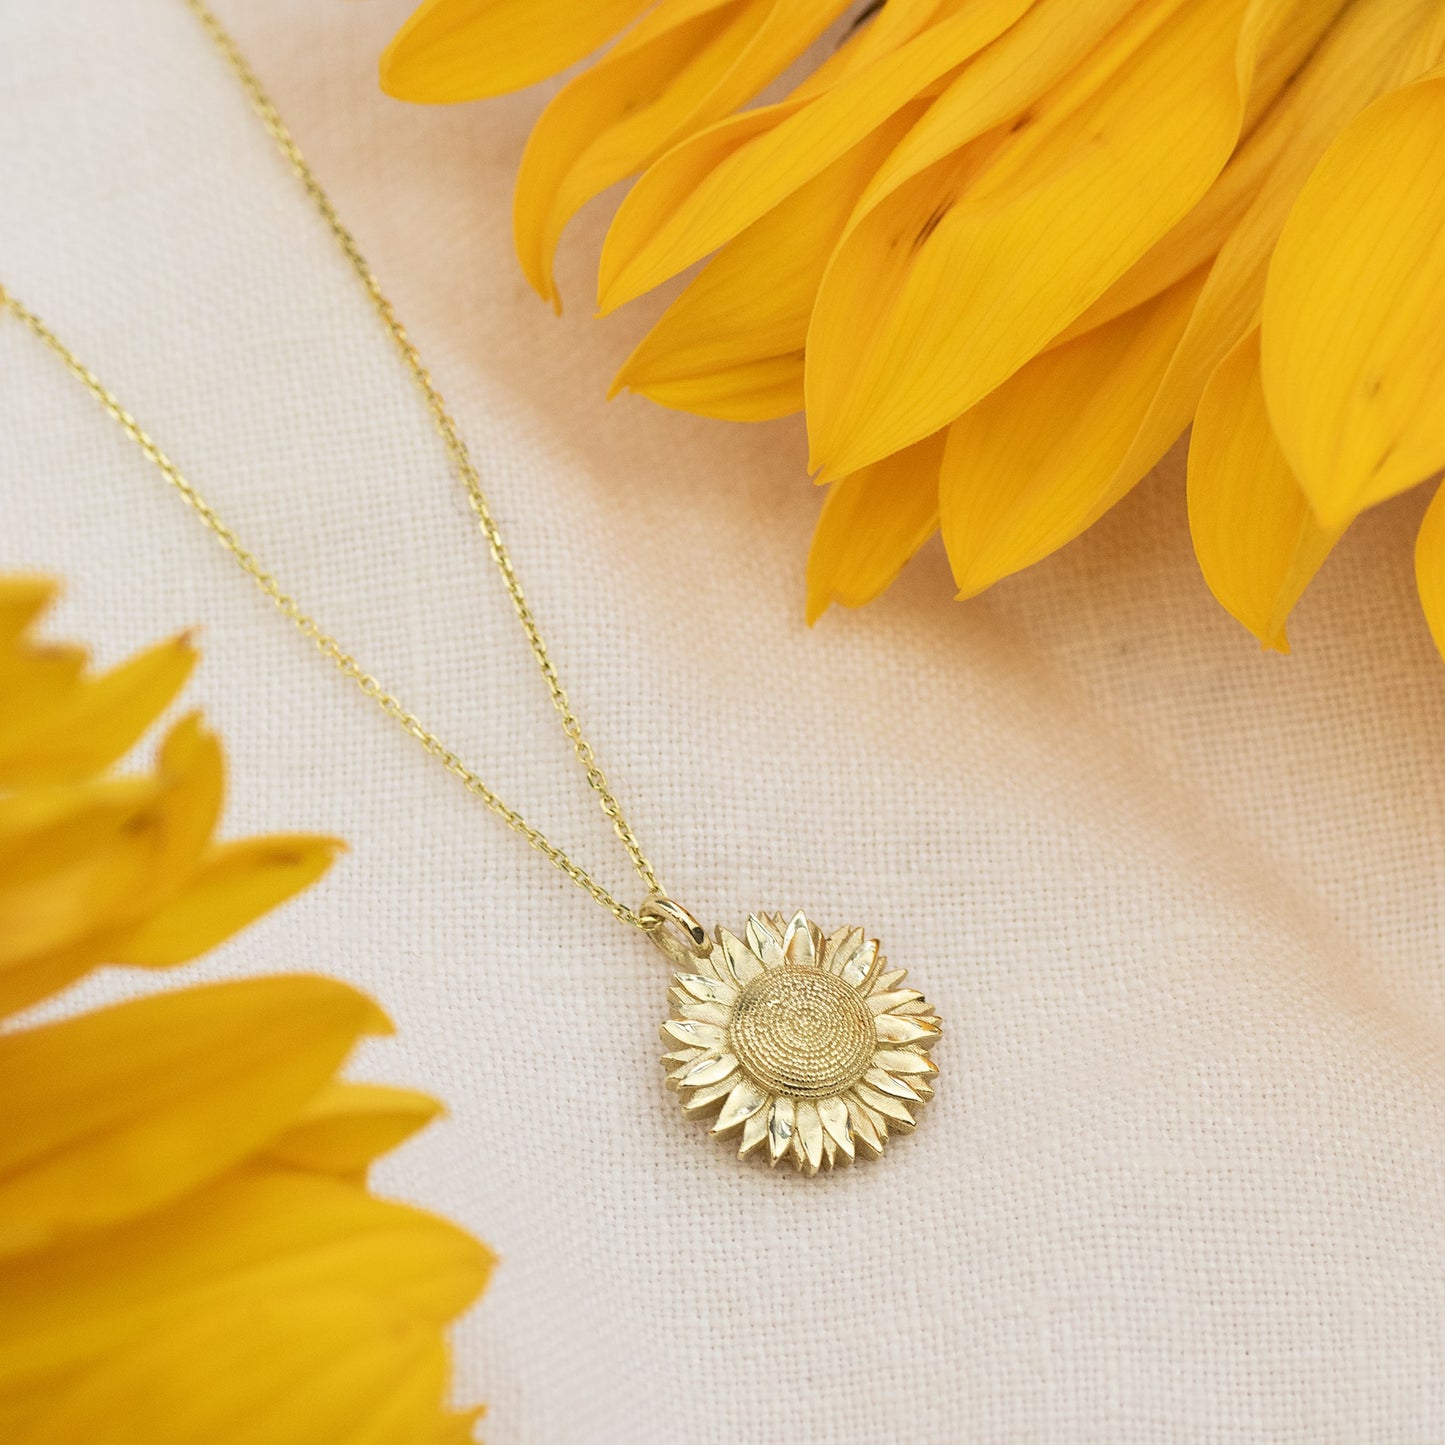 Gift for Friend - Friendship Necklace - Sunflower - 9kt Gold